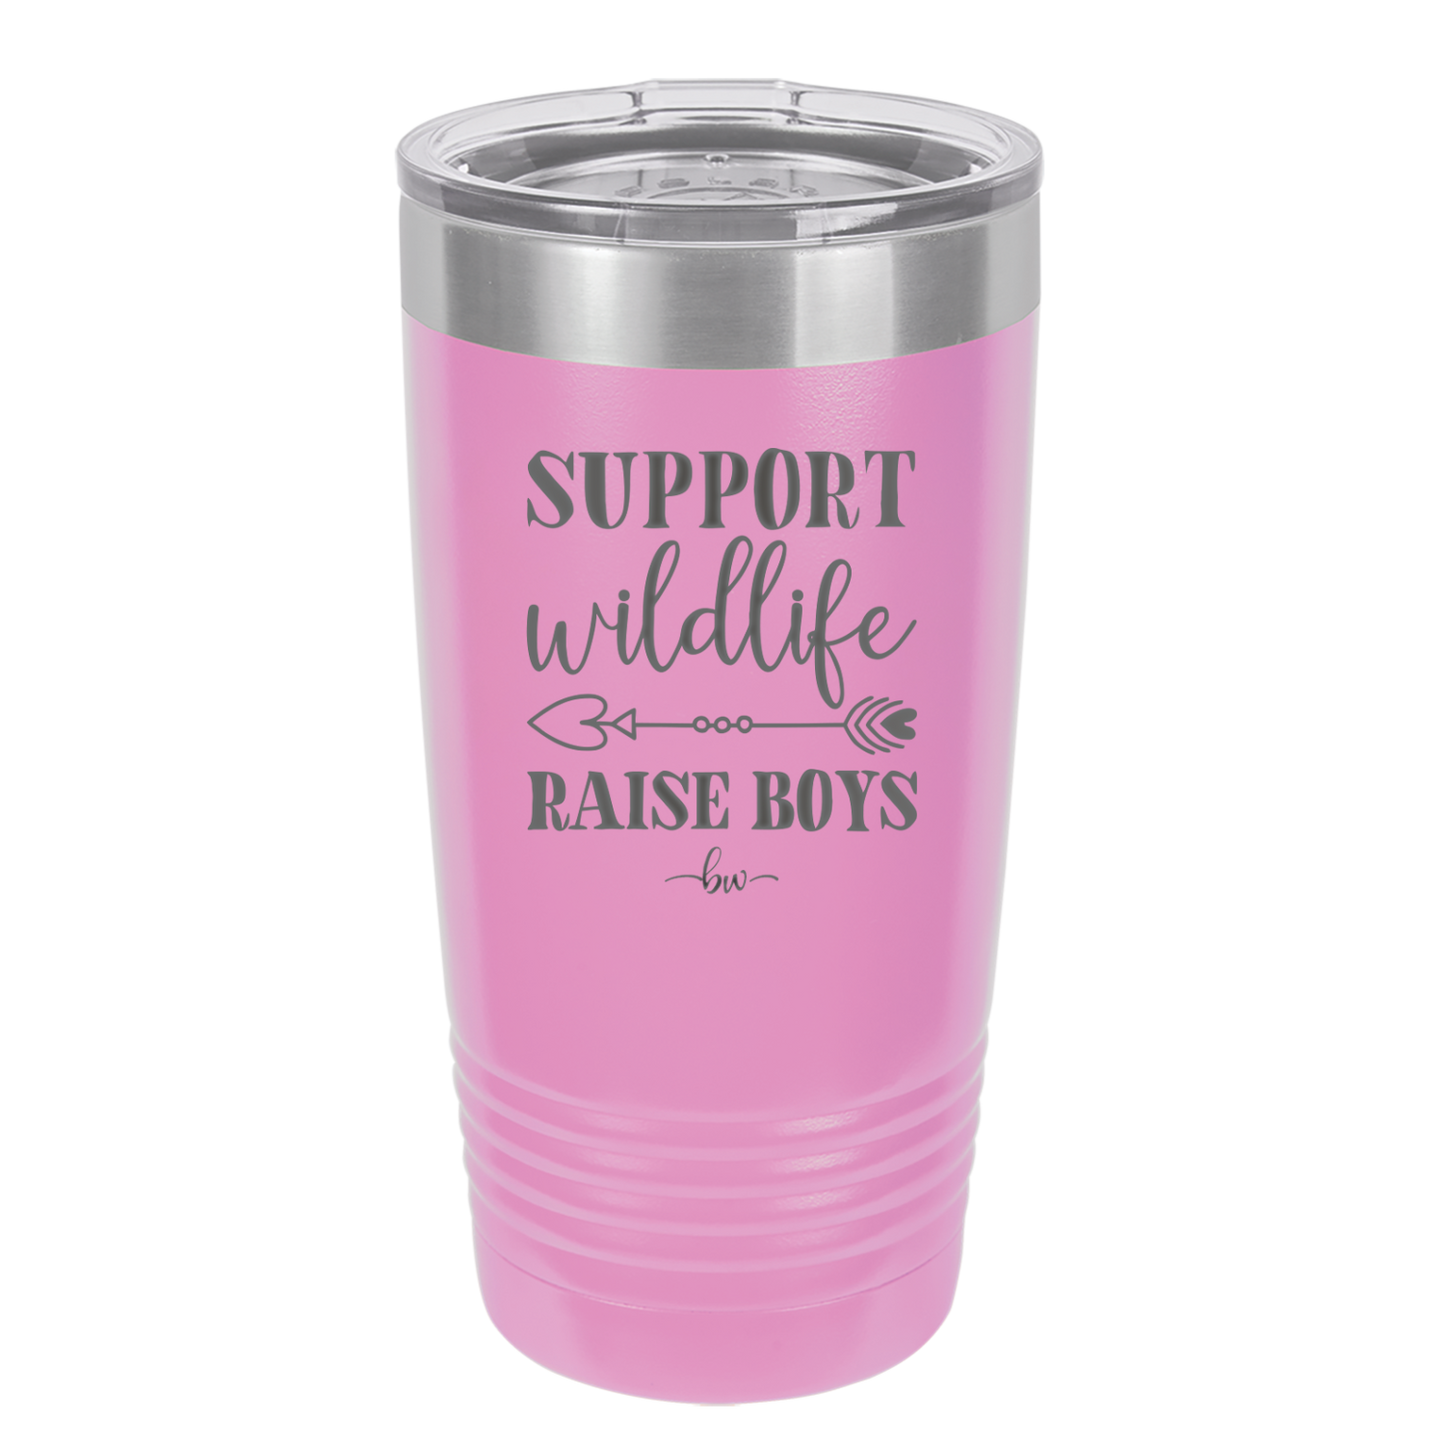 Support Wildlife Raise Boys - Laser Engraved Stainless Steel Drinkware - 1598 -